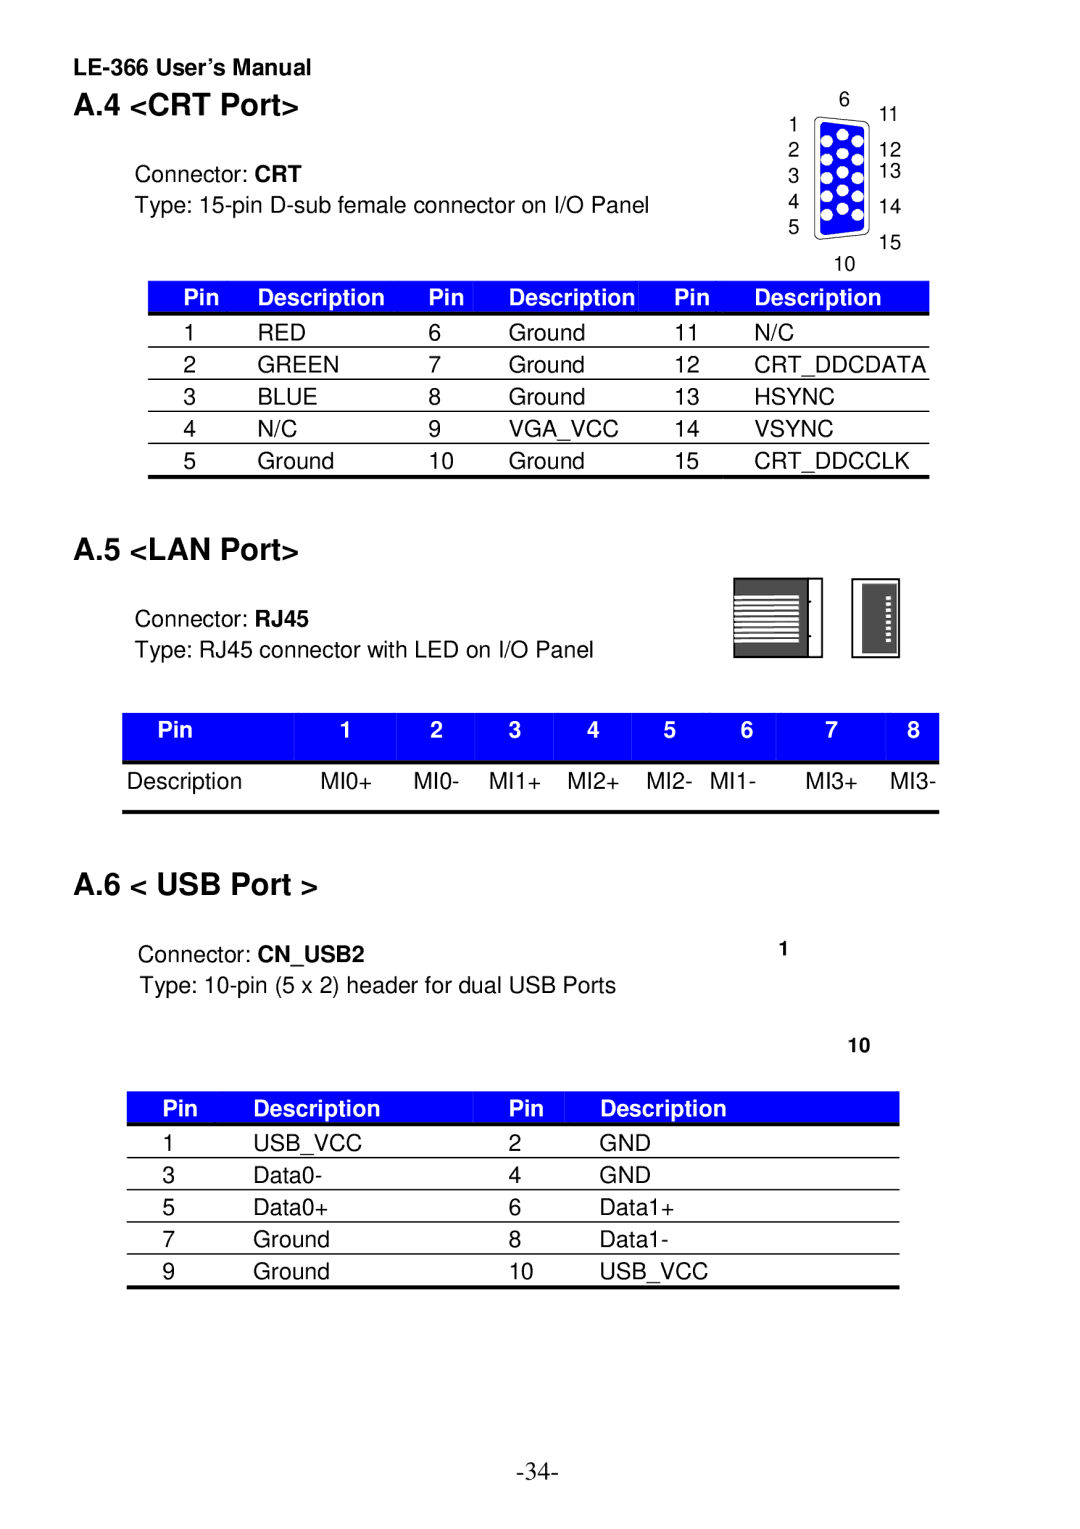 AMD LE-366 user manual CRT Port, LAN Port, USB Port 